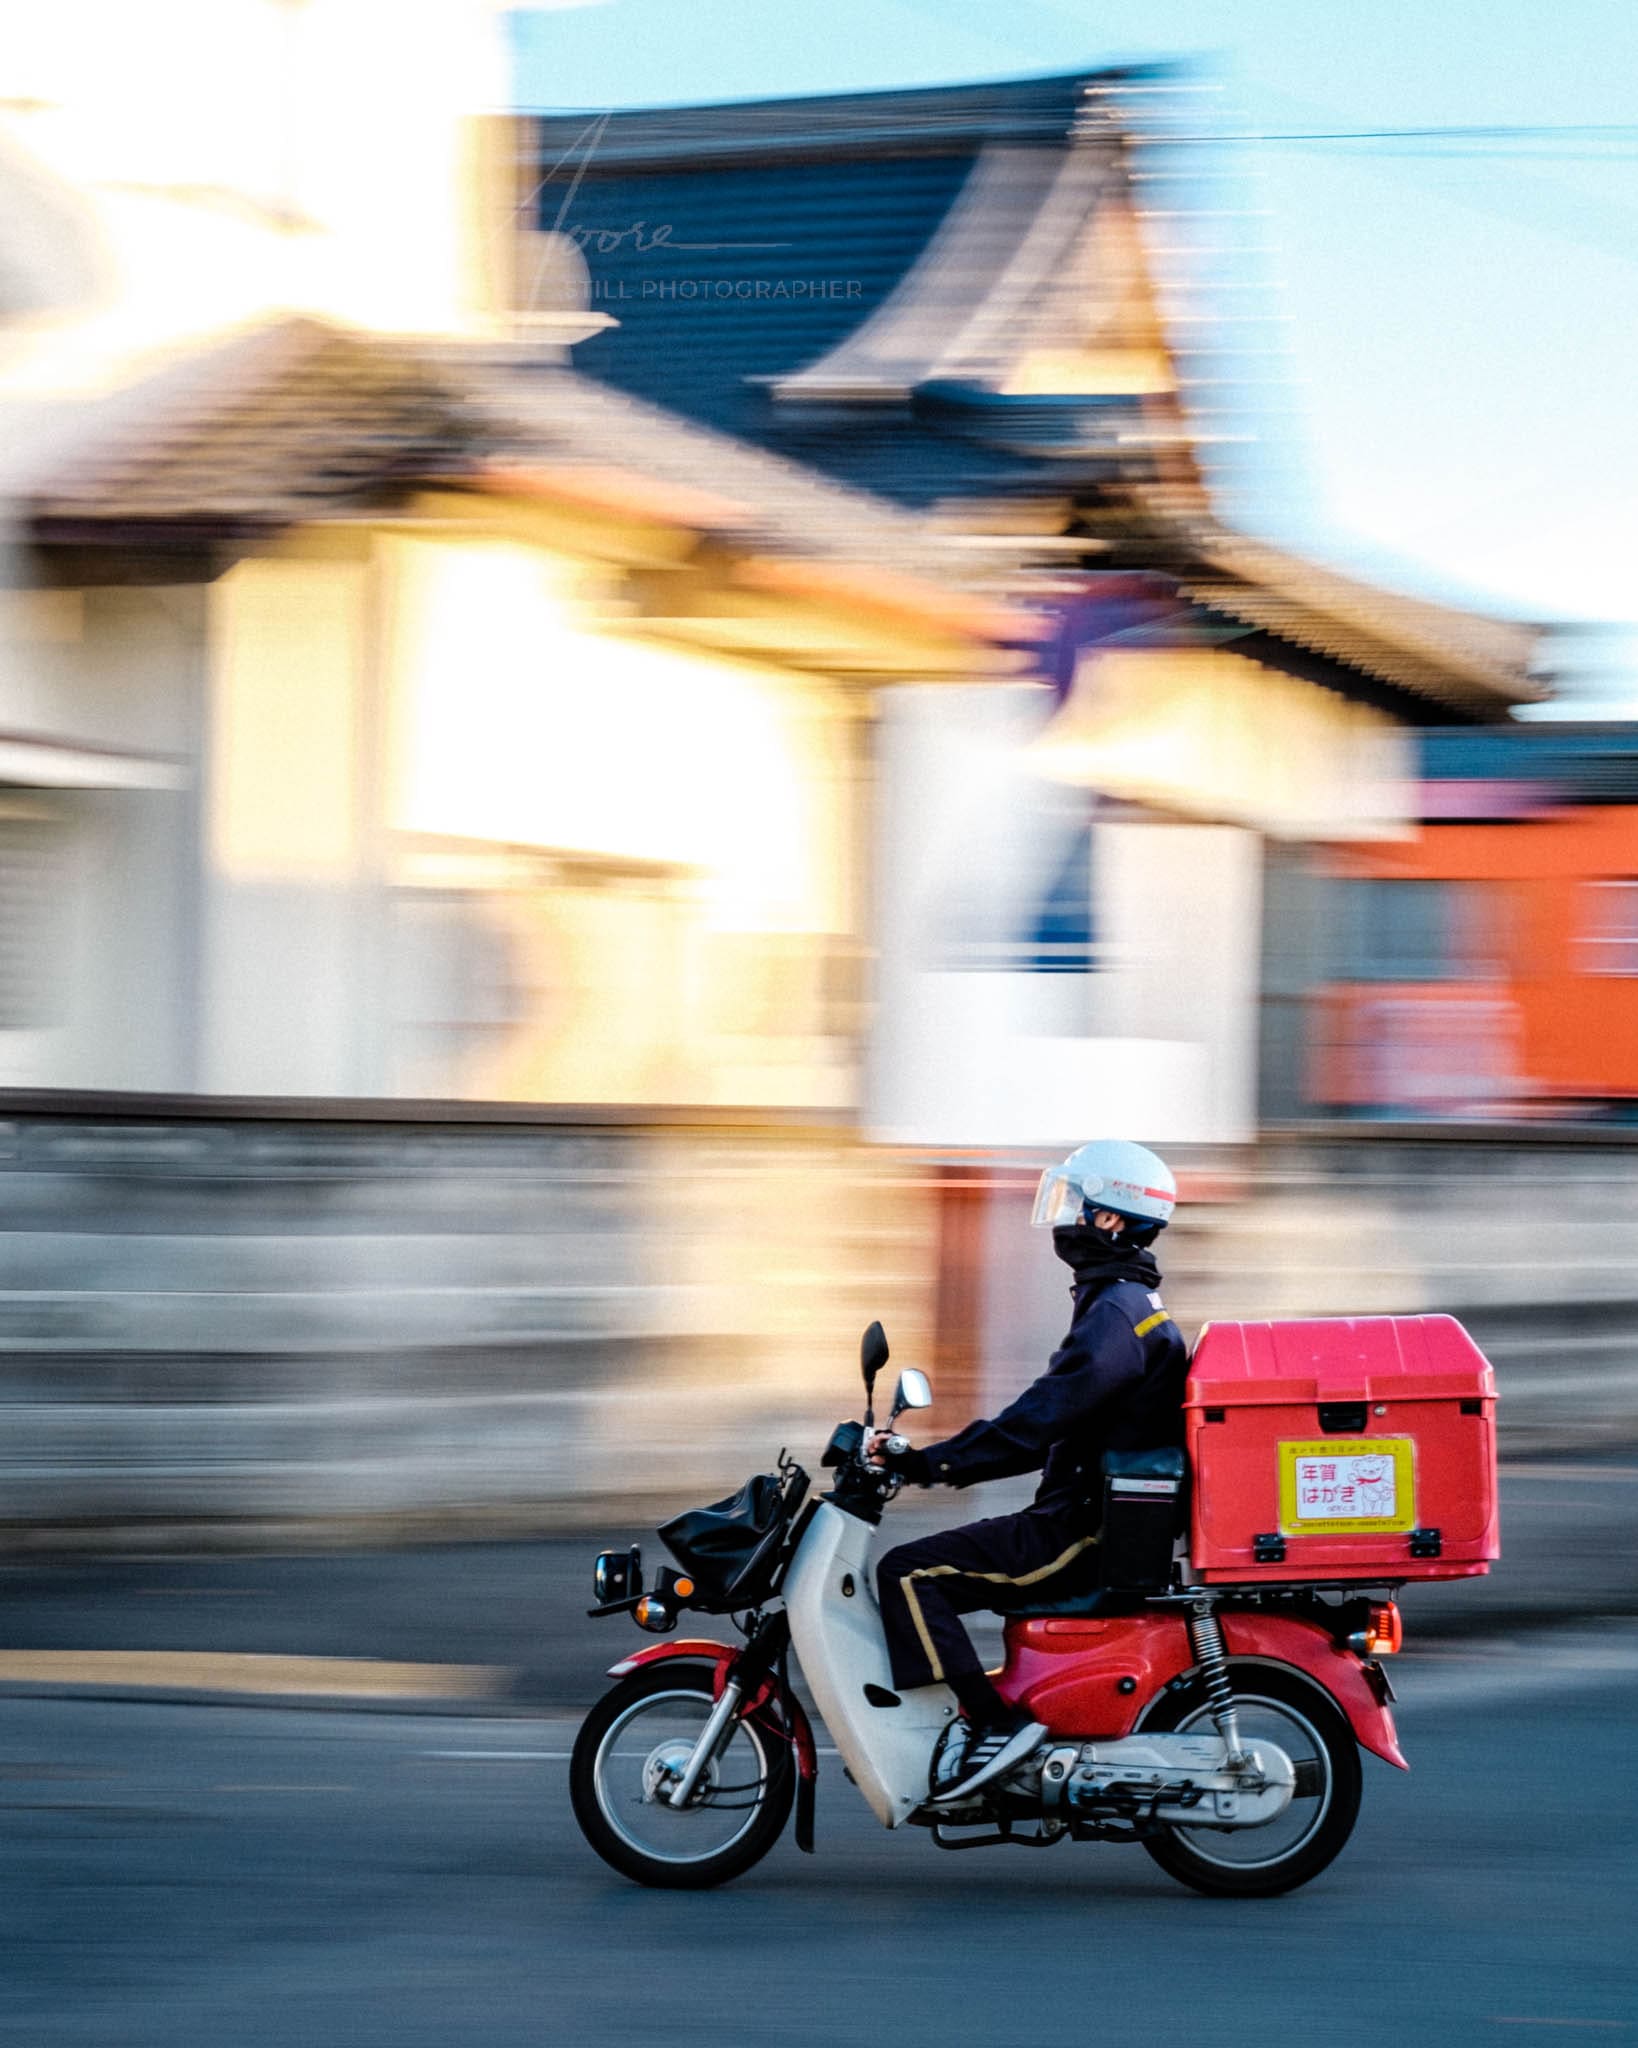 Postal driver on motorcycle speeding through Iwaki City Japan during golden hour.